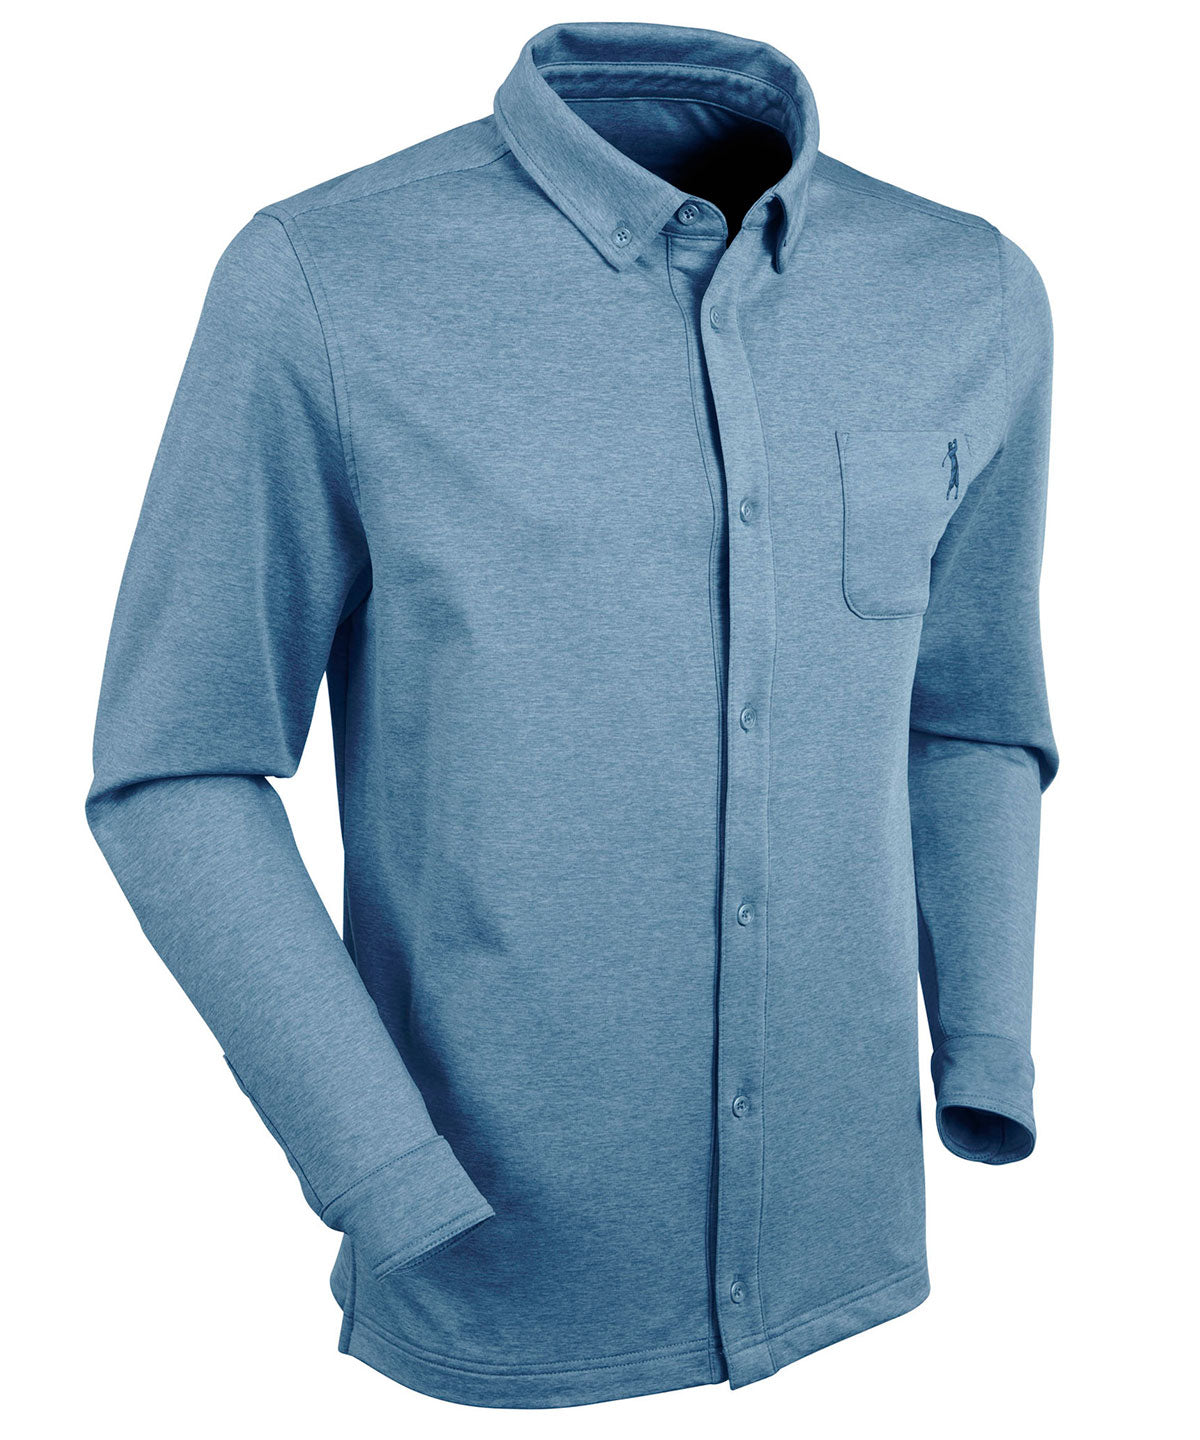 center back seam & back cuff detail  Menswear, Up shirt, Button up shirts